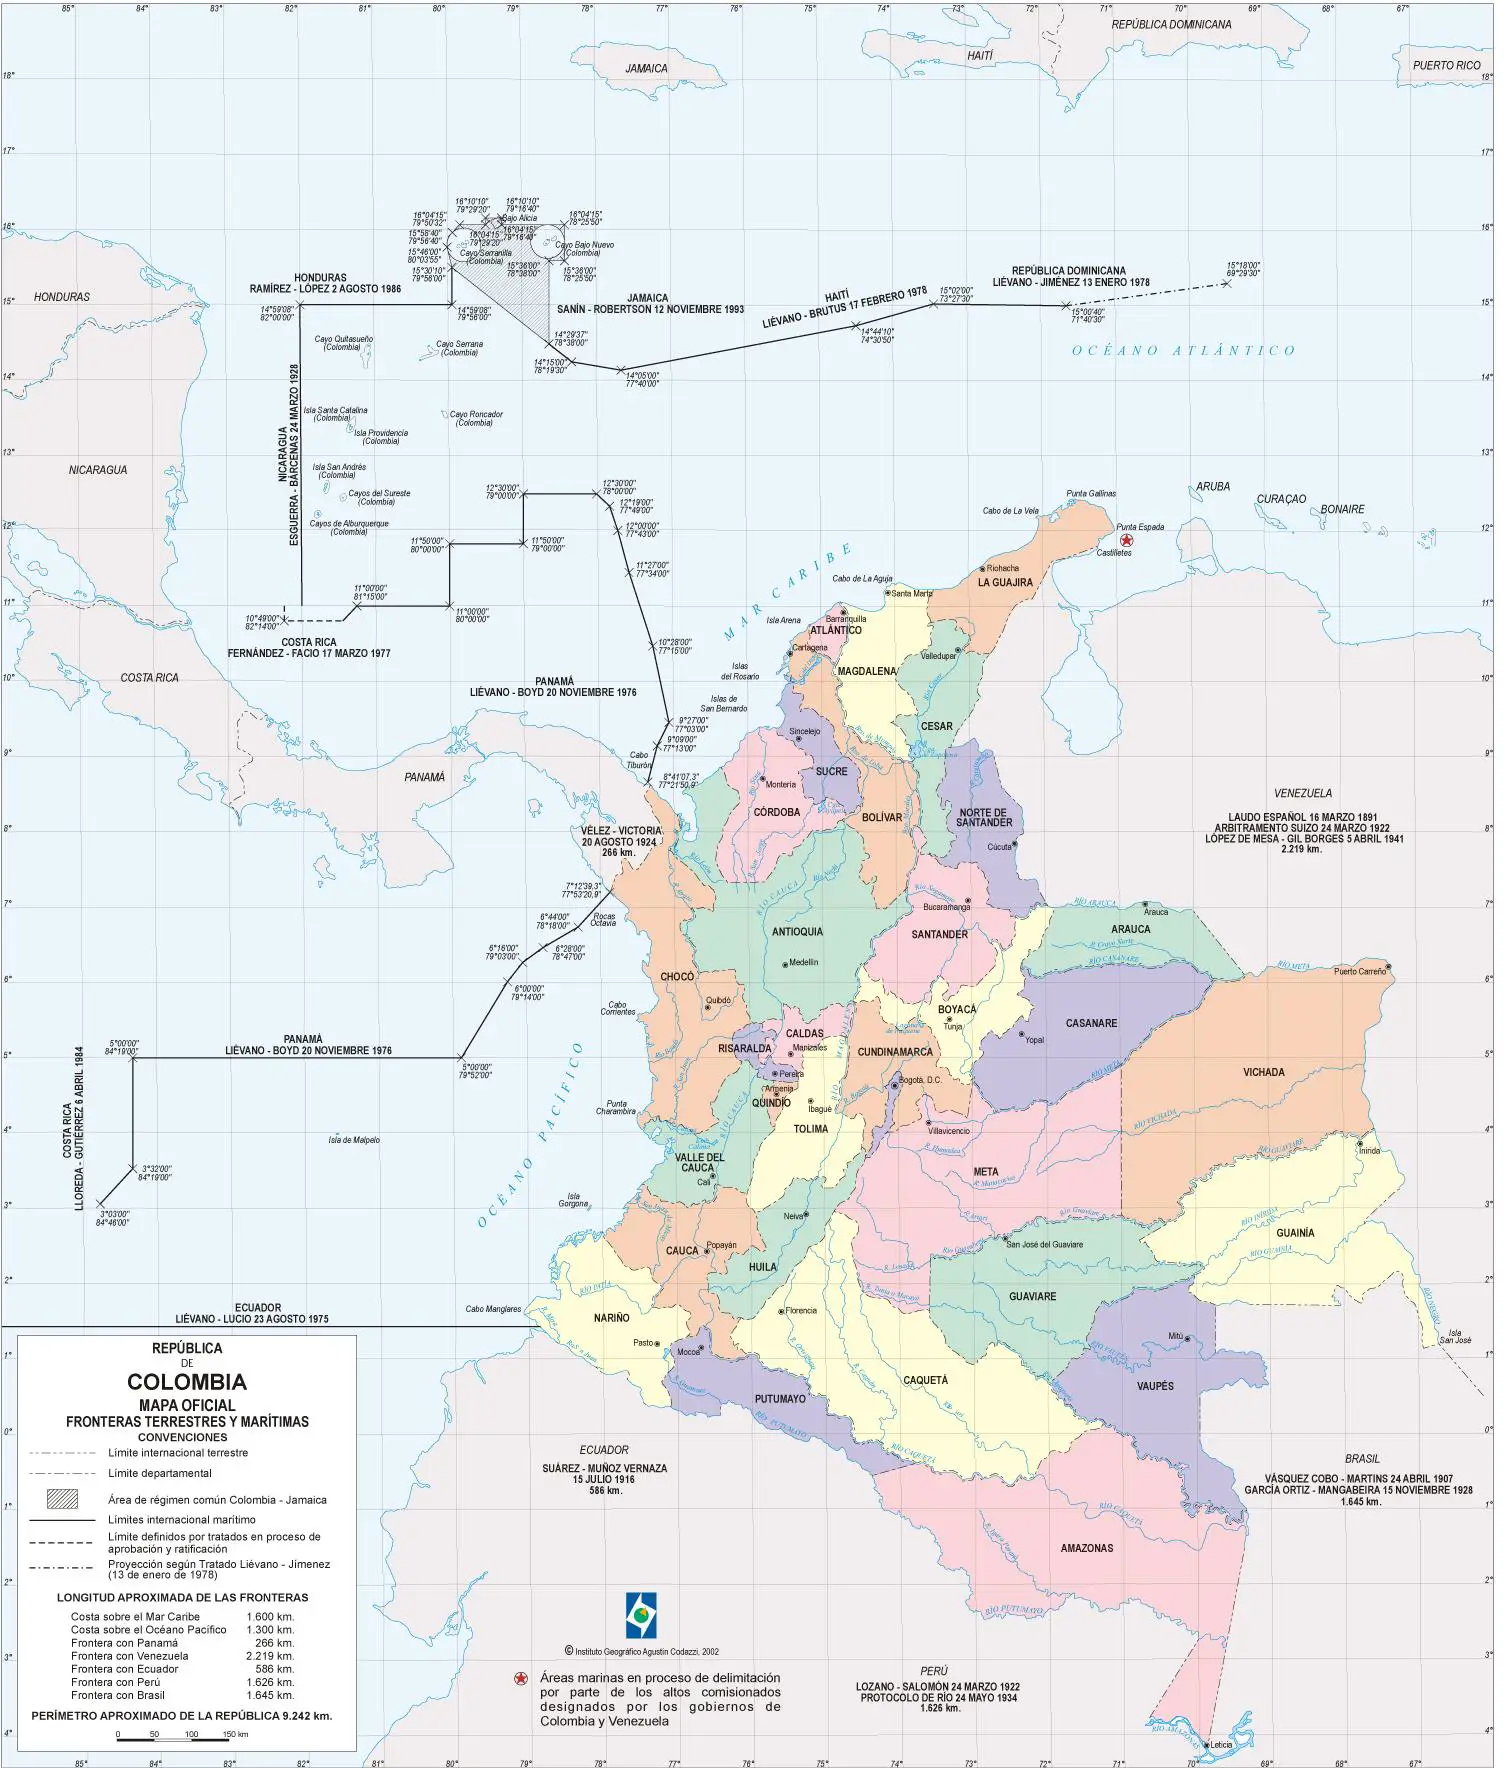 Colombia_siyasi_harita_2002.jpg